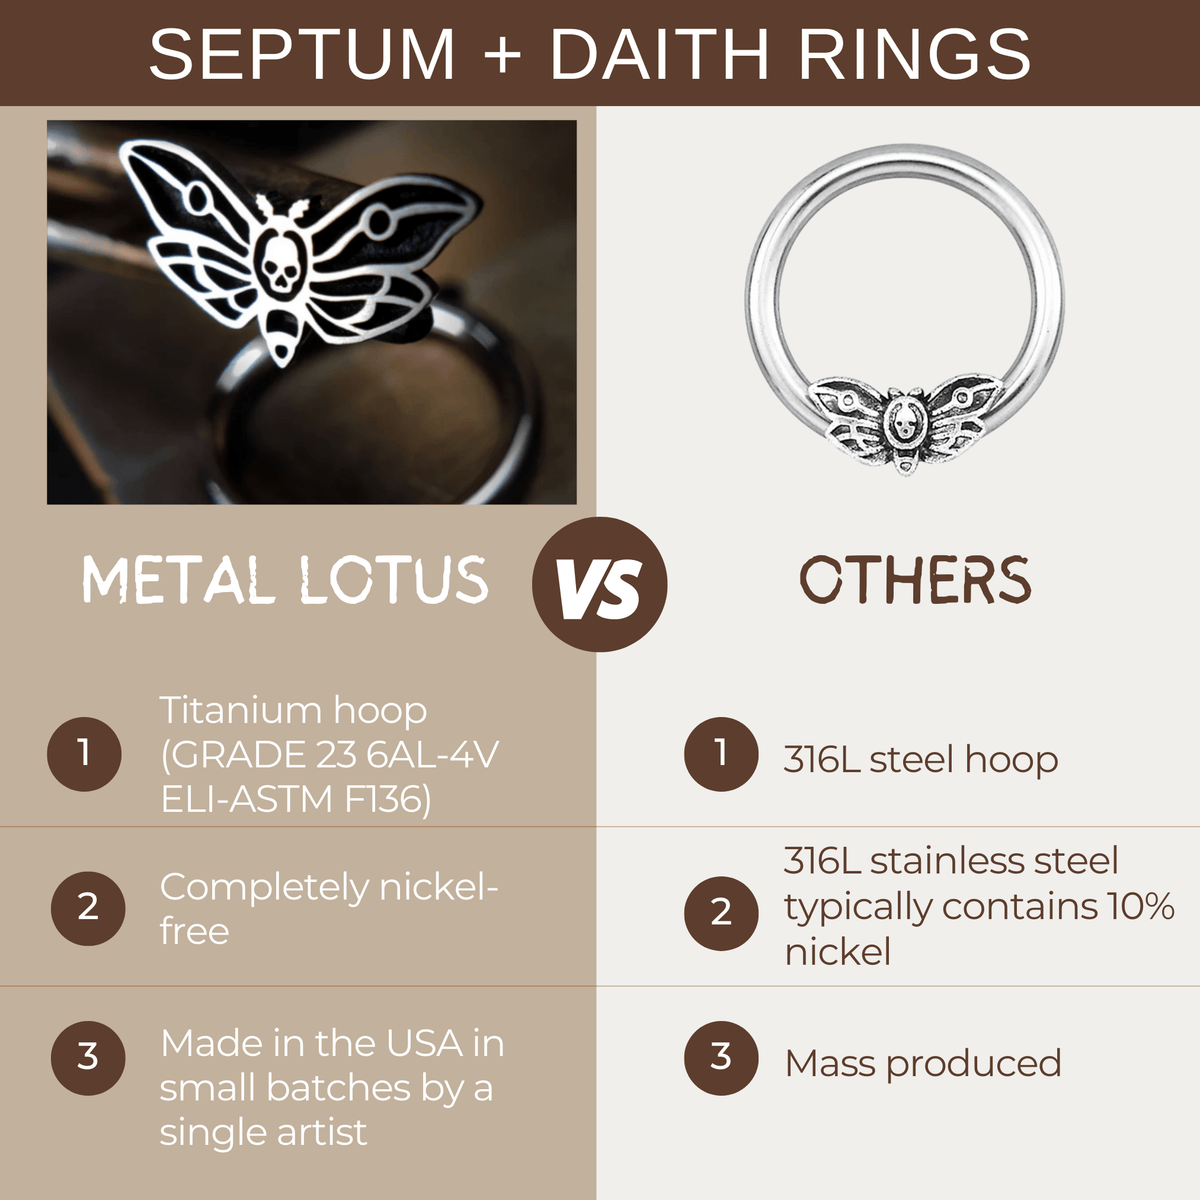 Octopus Septum + Daith Ring - Metal Lotus